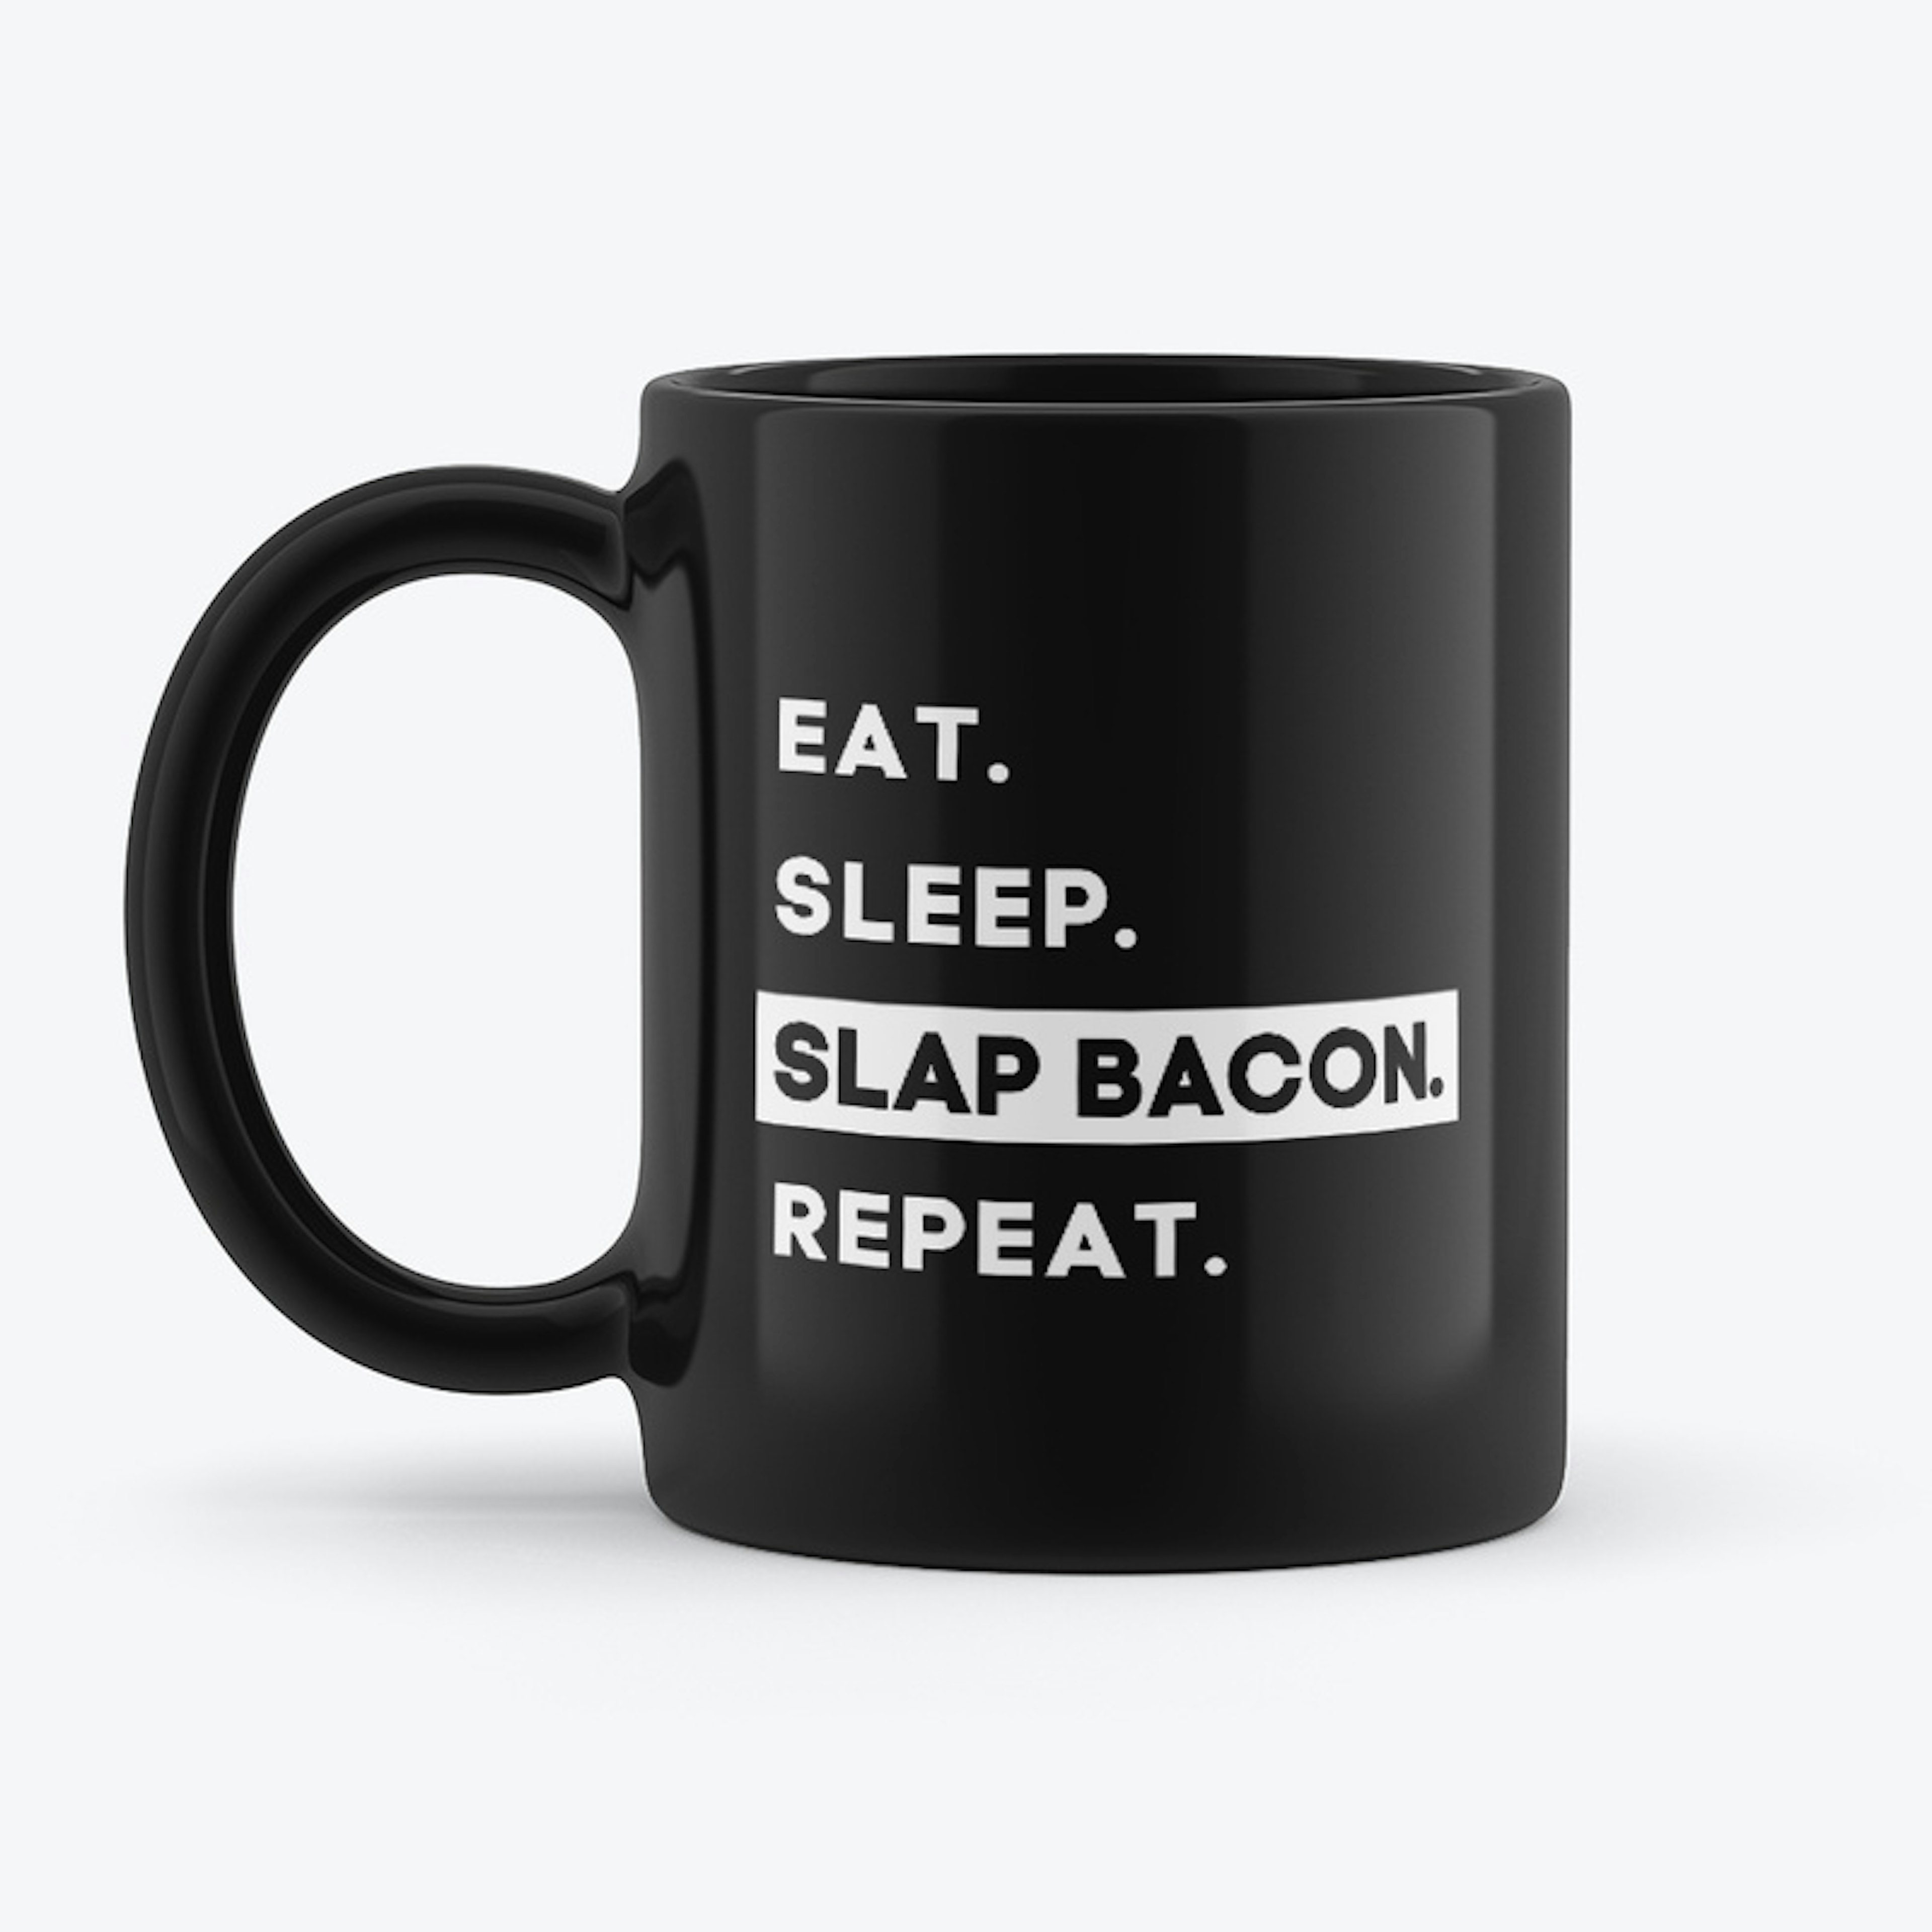 Slap Bacon.